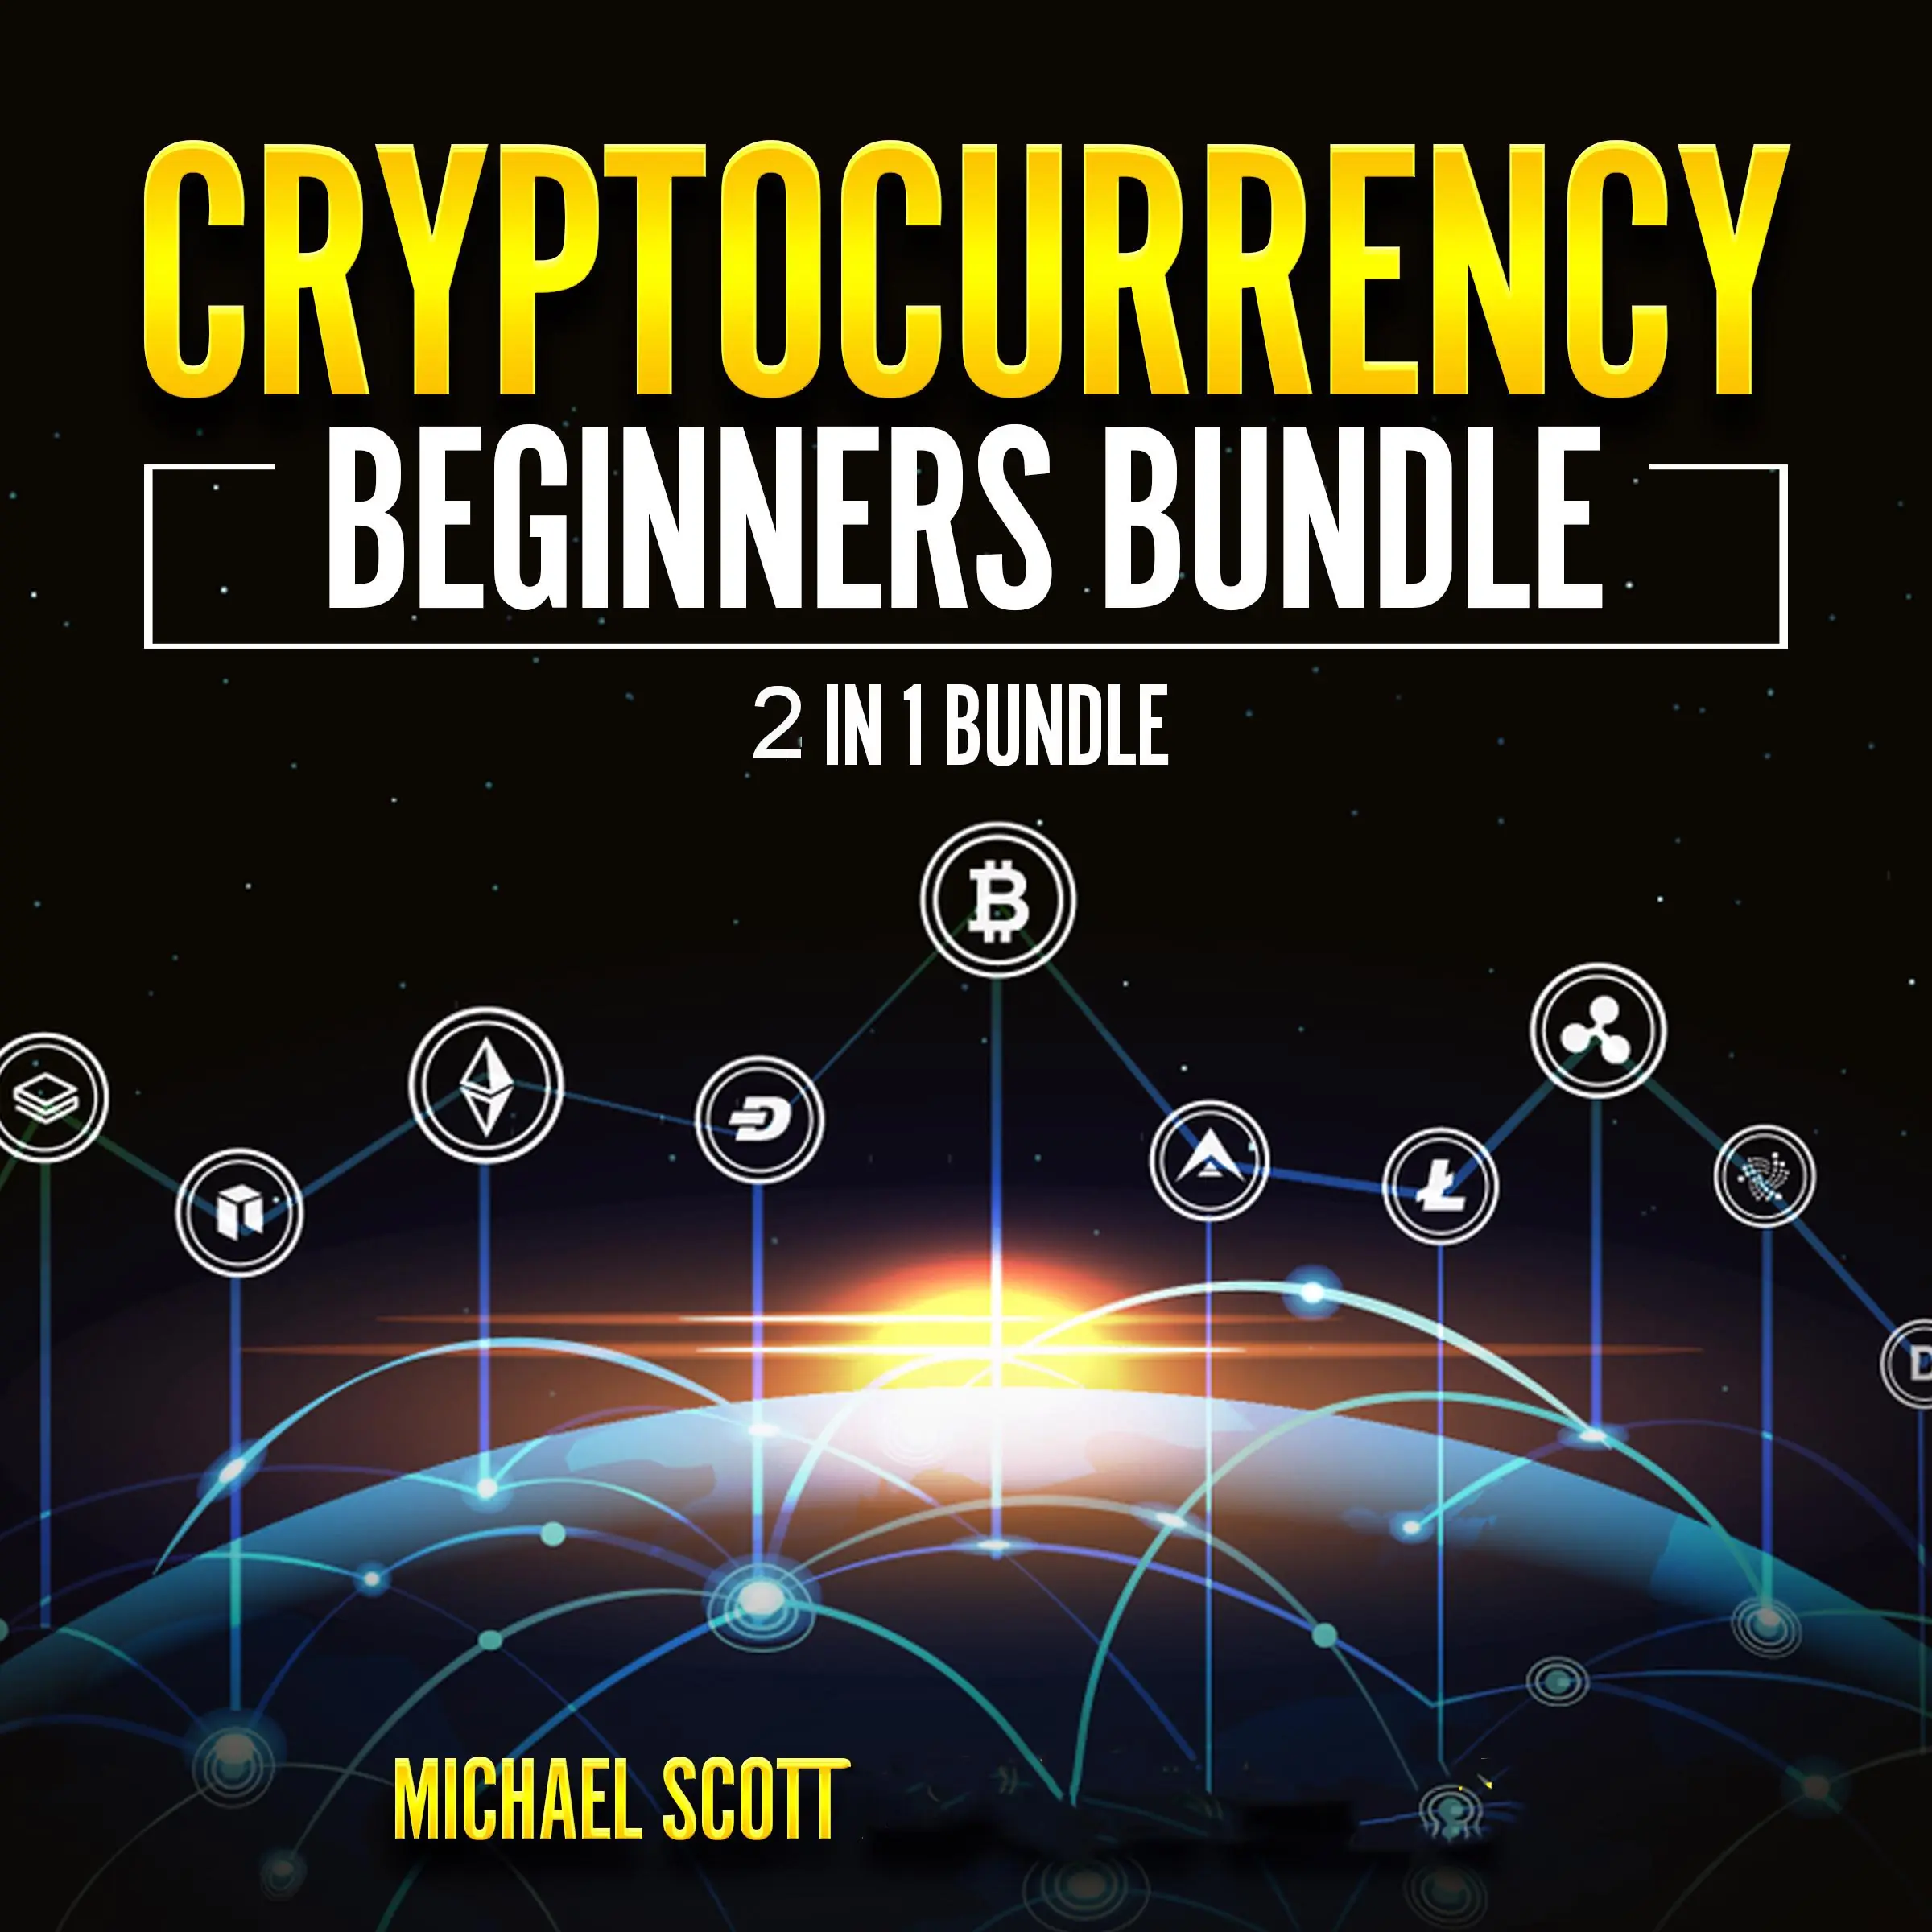 Cryptocurrency Beginners Bundle: 2 in 1 Bundle, Cryptocurrency For Beginners, Cryptocurrency Trading Strategies by Michael Scott Audiobook